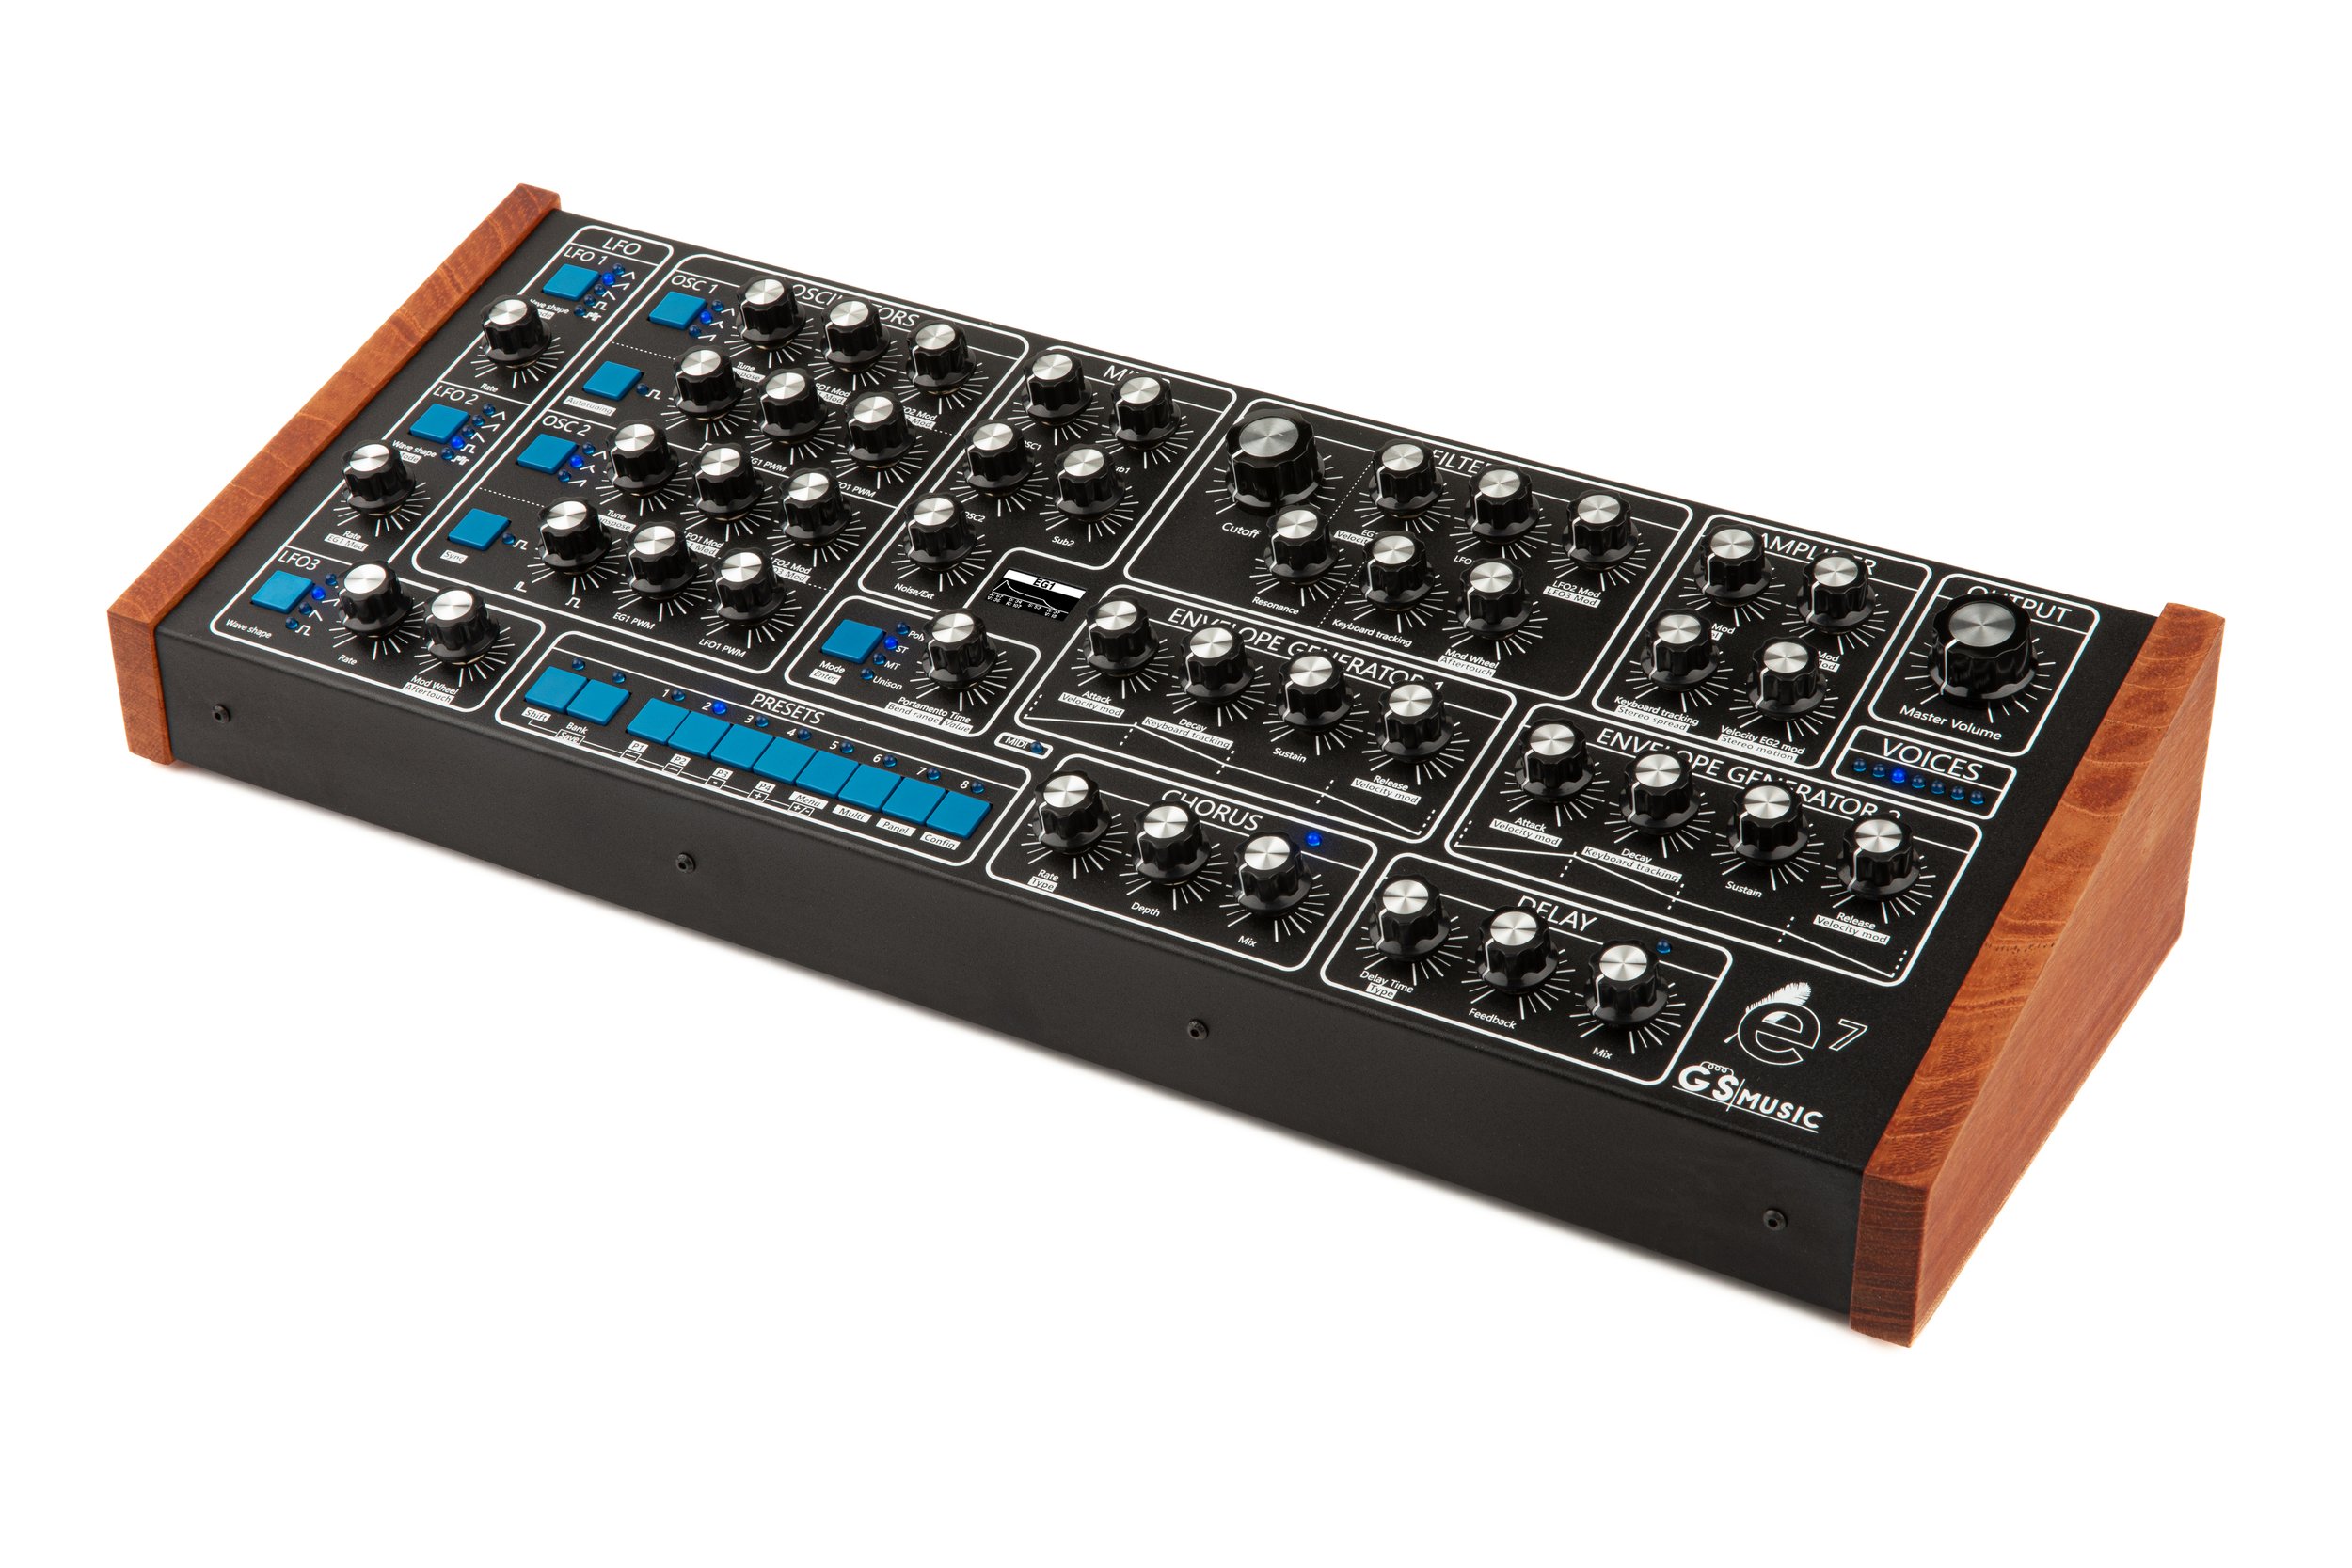 GS e7 Analog Polyphonic Synthesizer (Black/Blue) — GS Music